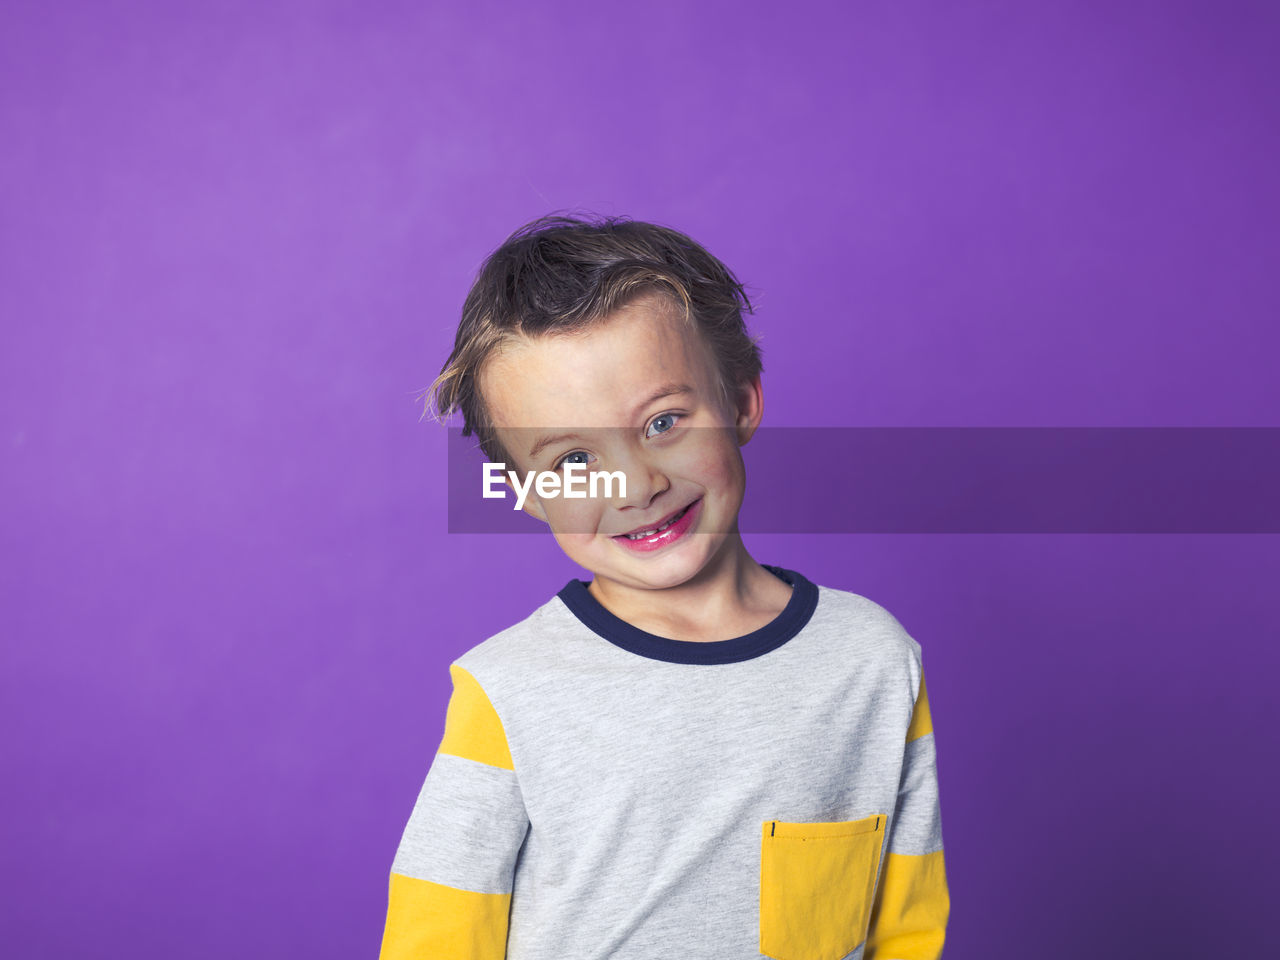 Boy against purple background